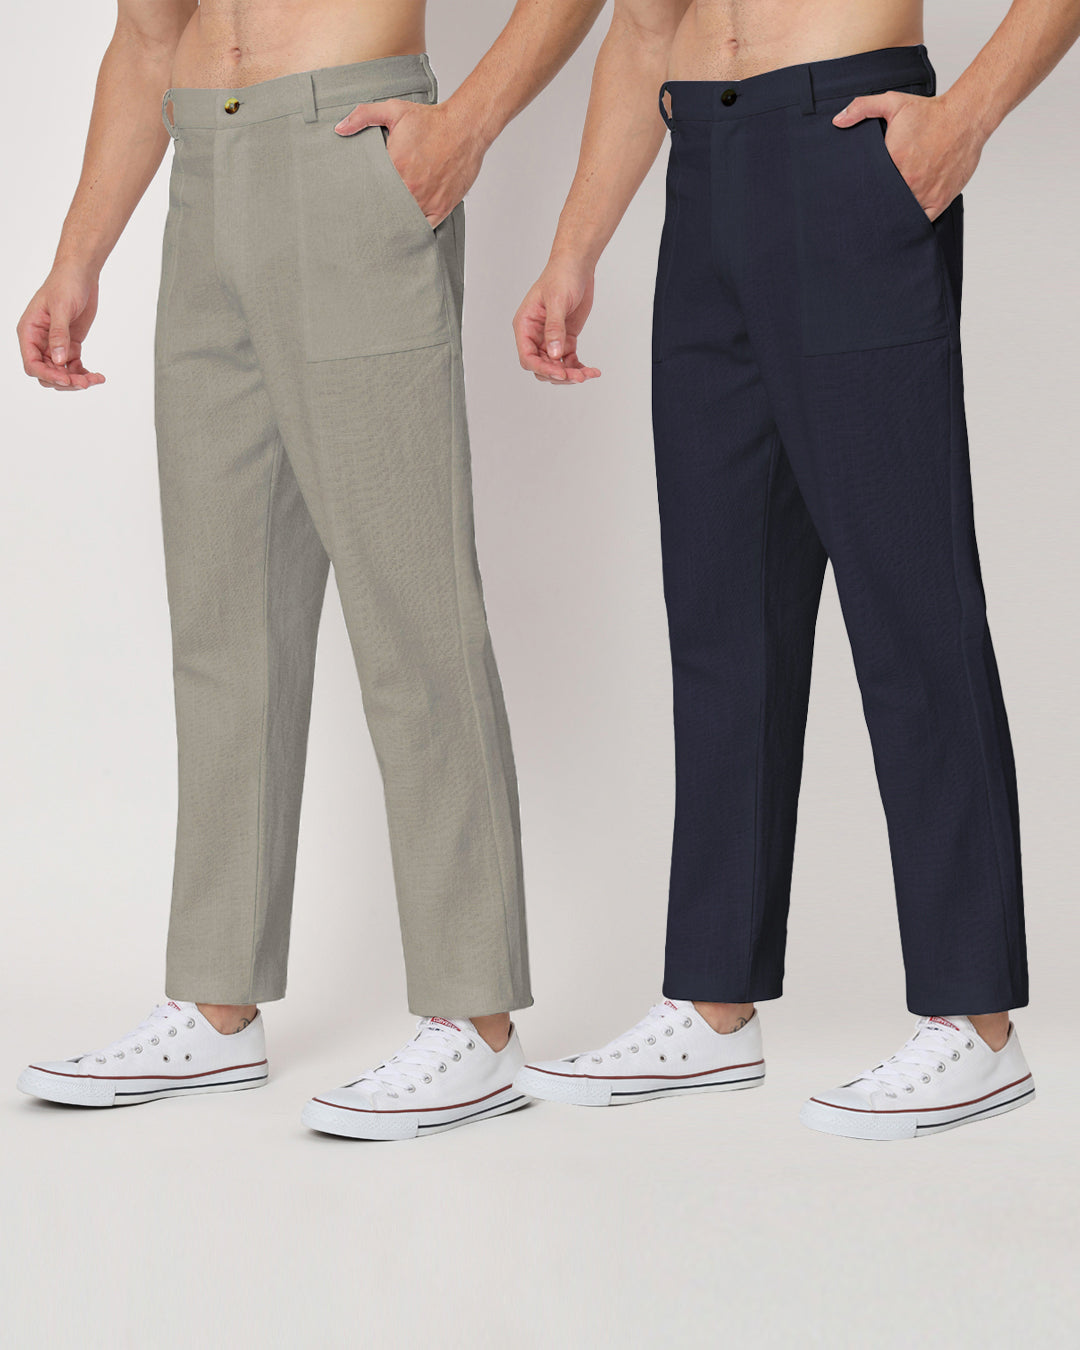 Combo : Comfy Ease Midnight Blue & Grey Men's Pants - Set of 2